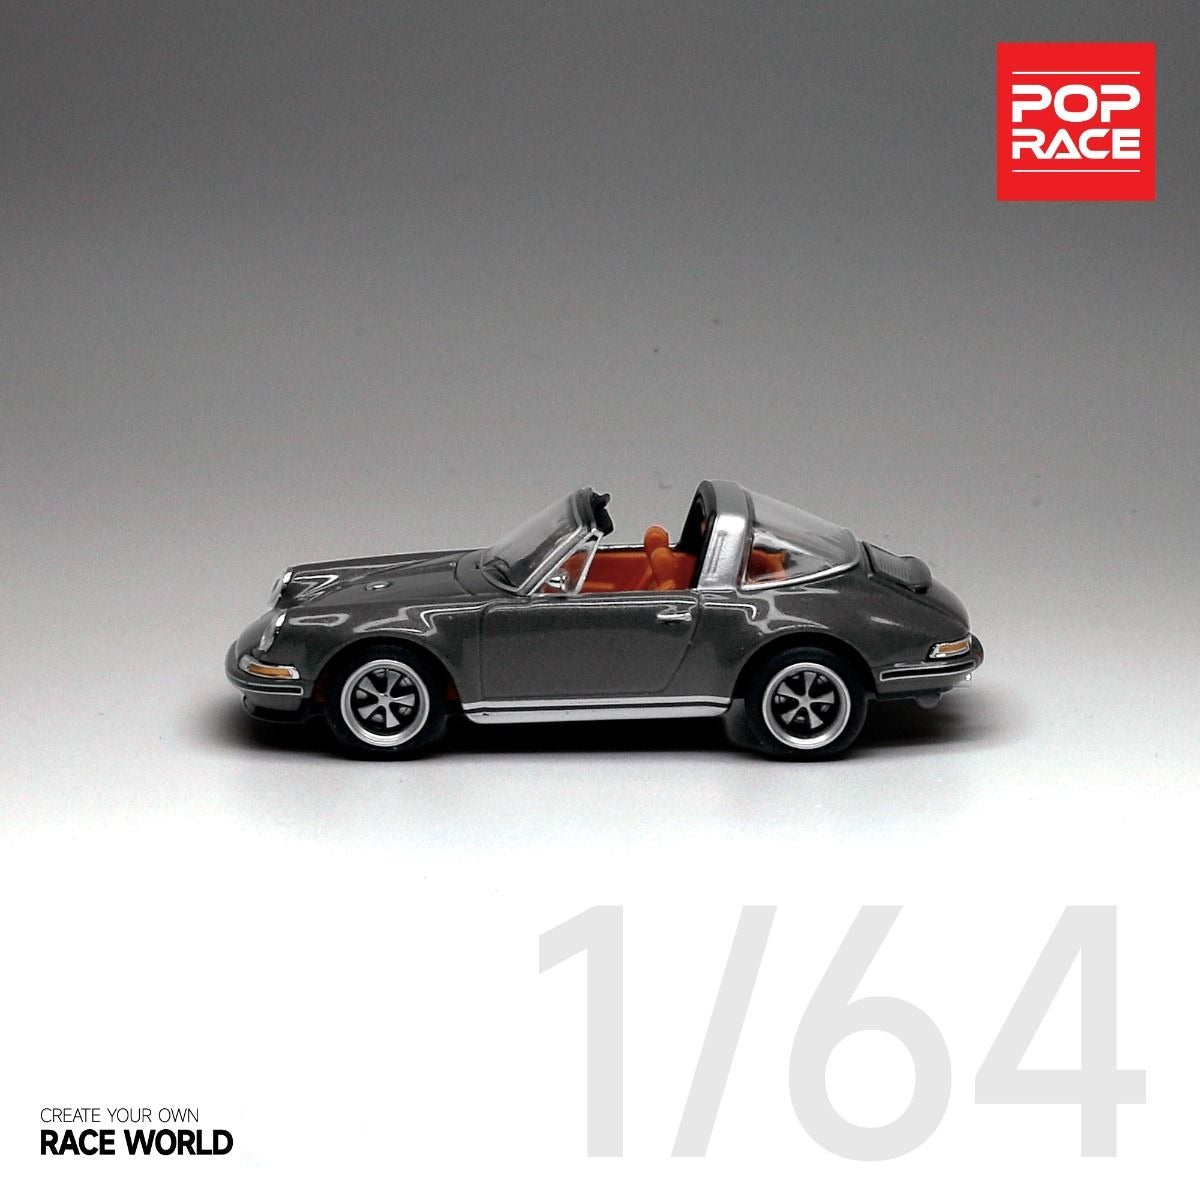 Pop Race 1:64 Scale Porsche 911 (964) Singer Targa Grey